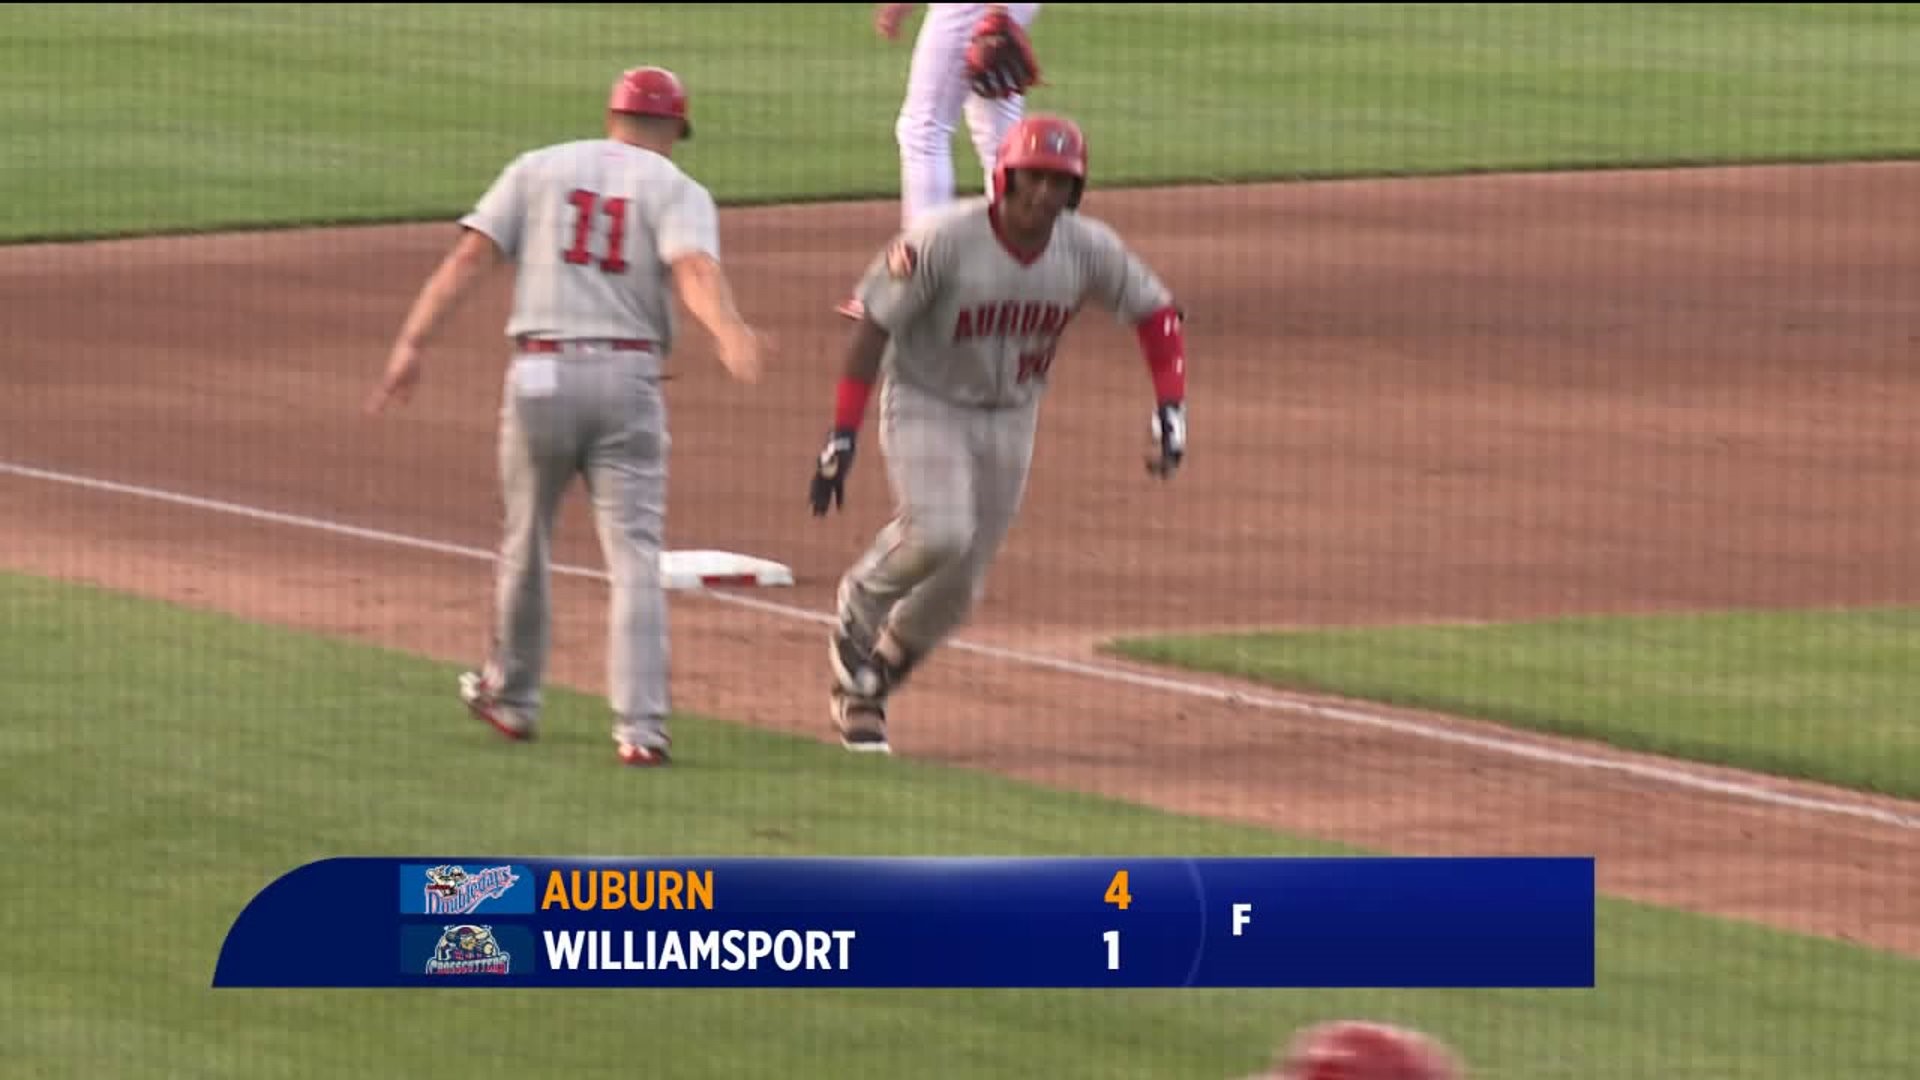 Auburn vs Williamsport baseball